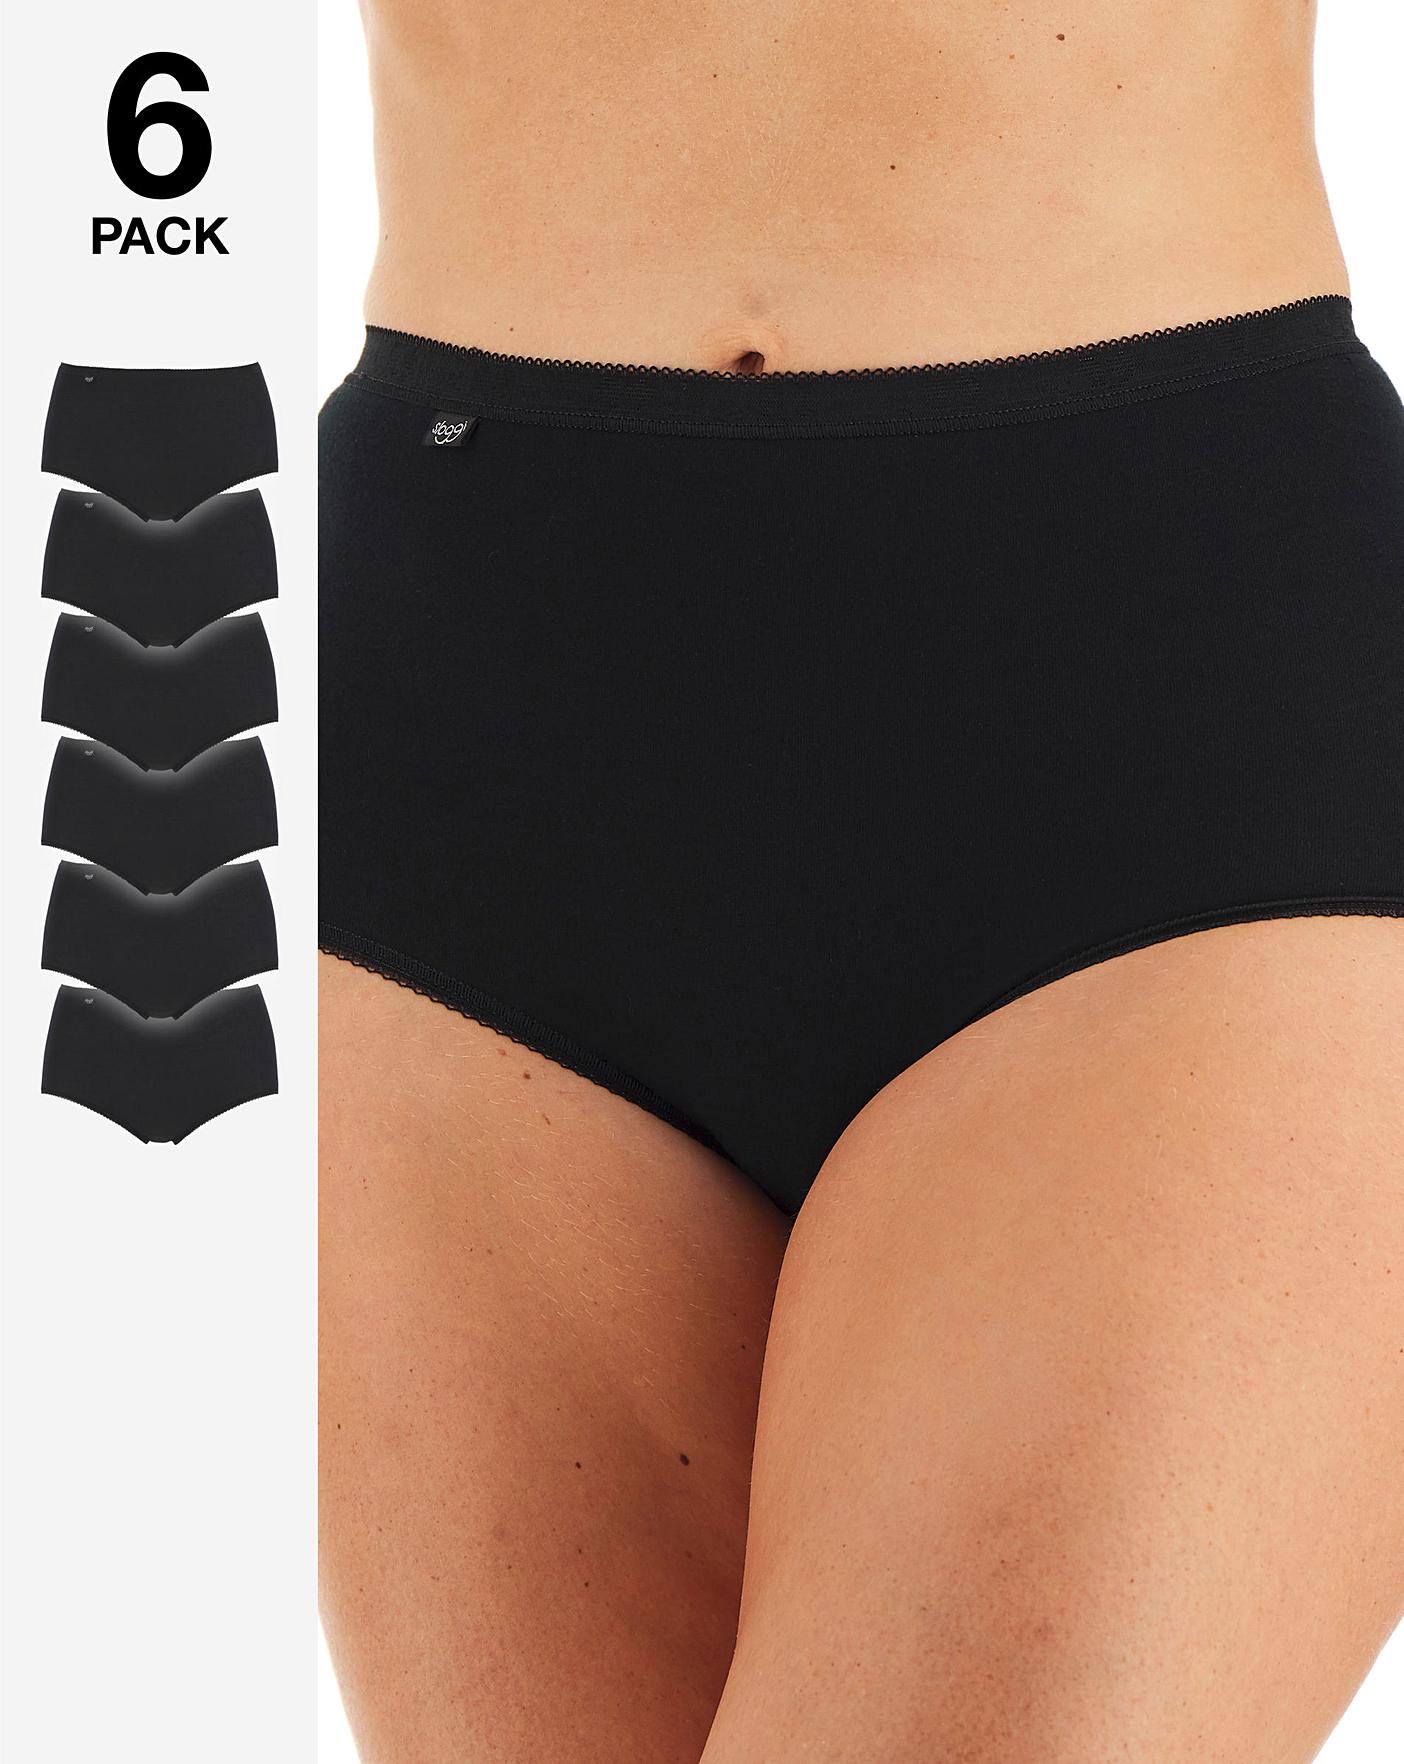 6 Pack Ladies Cotton Full Briefs Knickers Comfort Mama Underwear